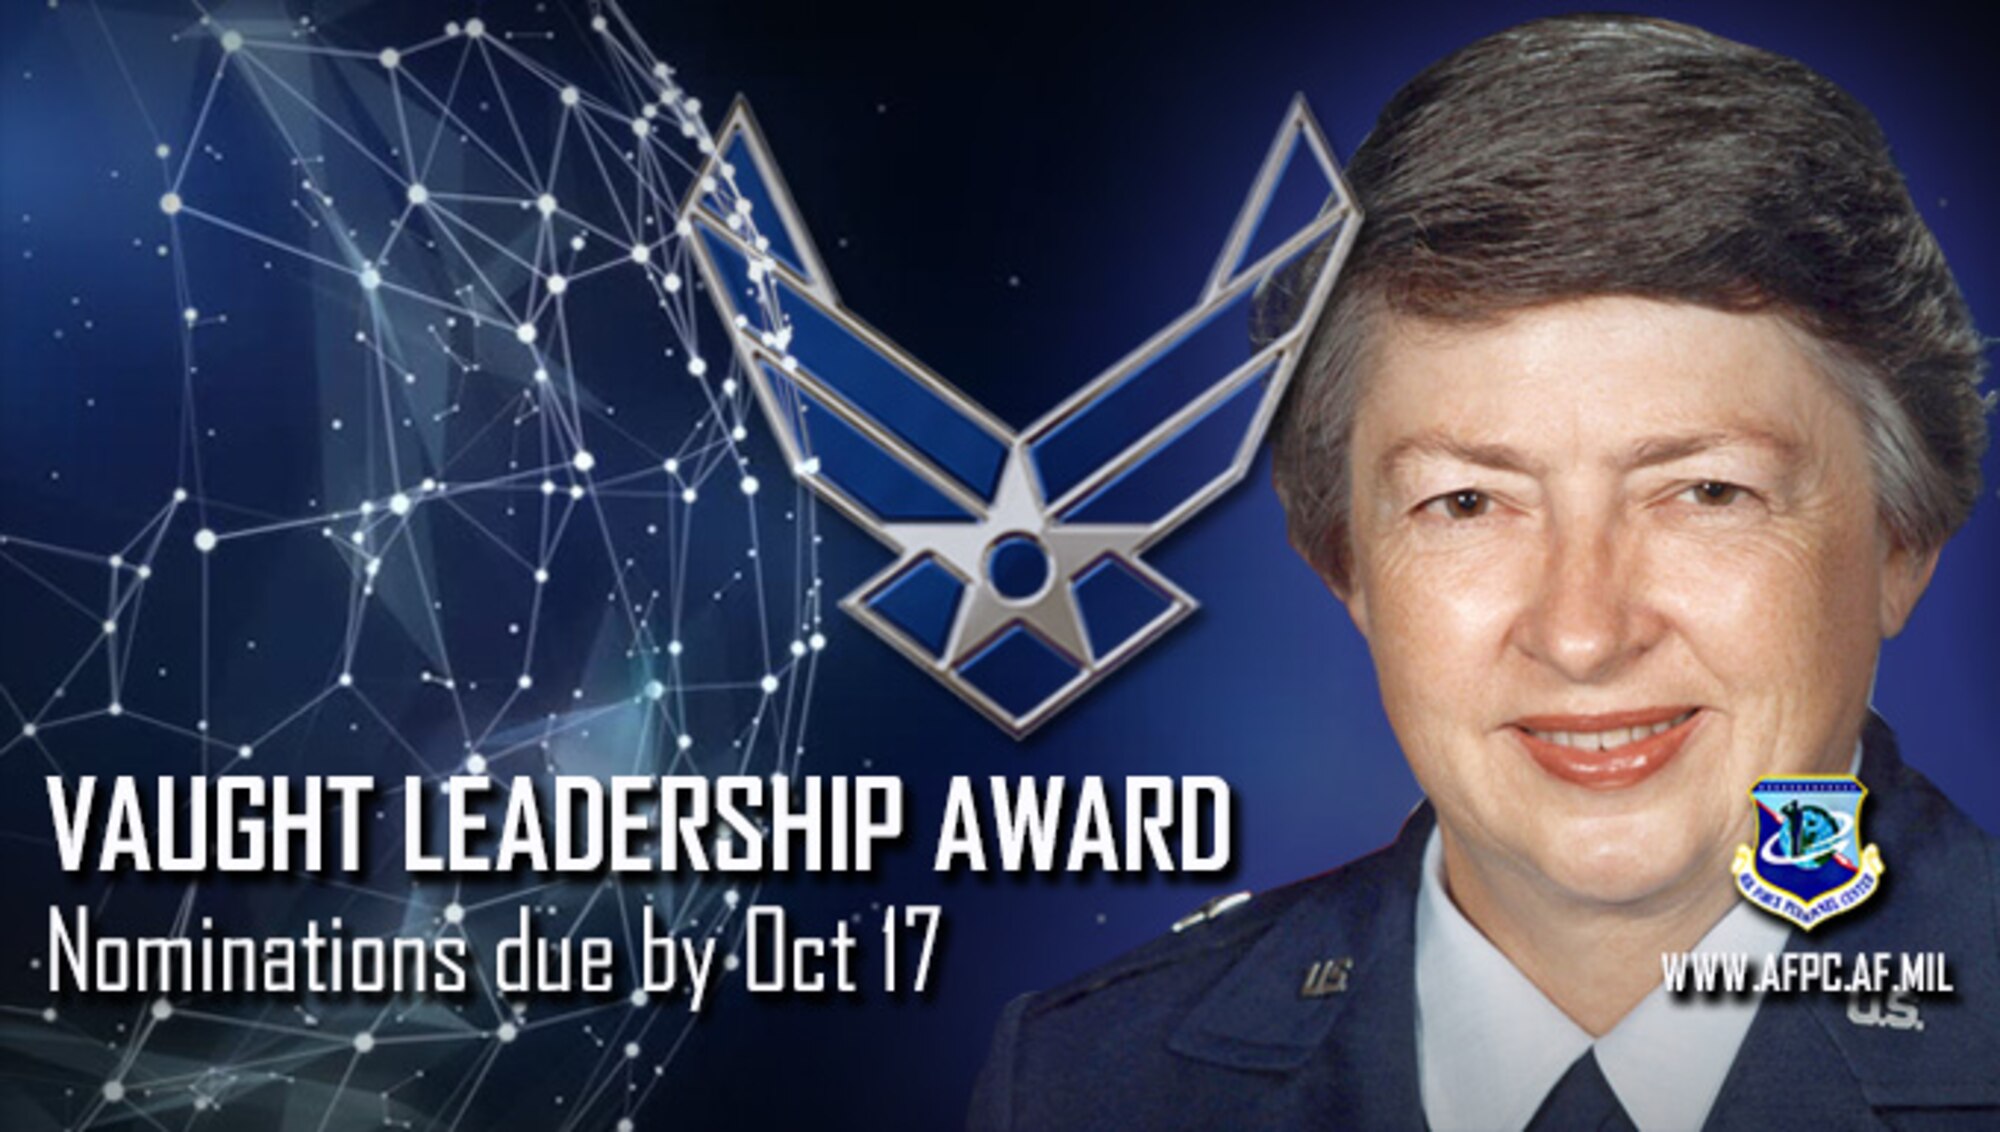 Vaught Leadership Award; Nominations due by Oct 17